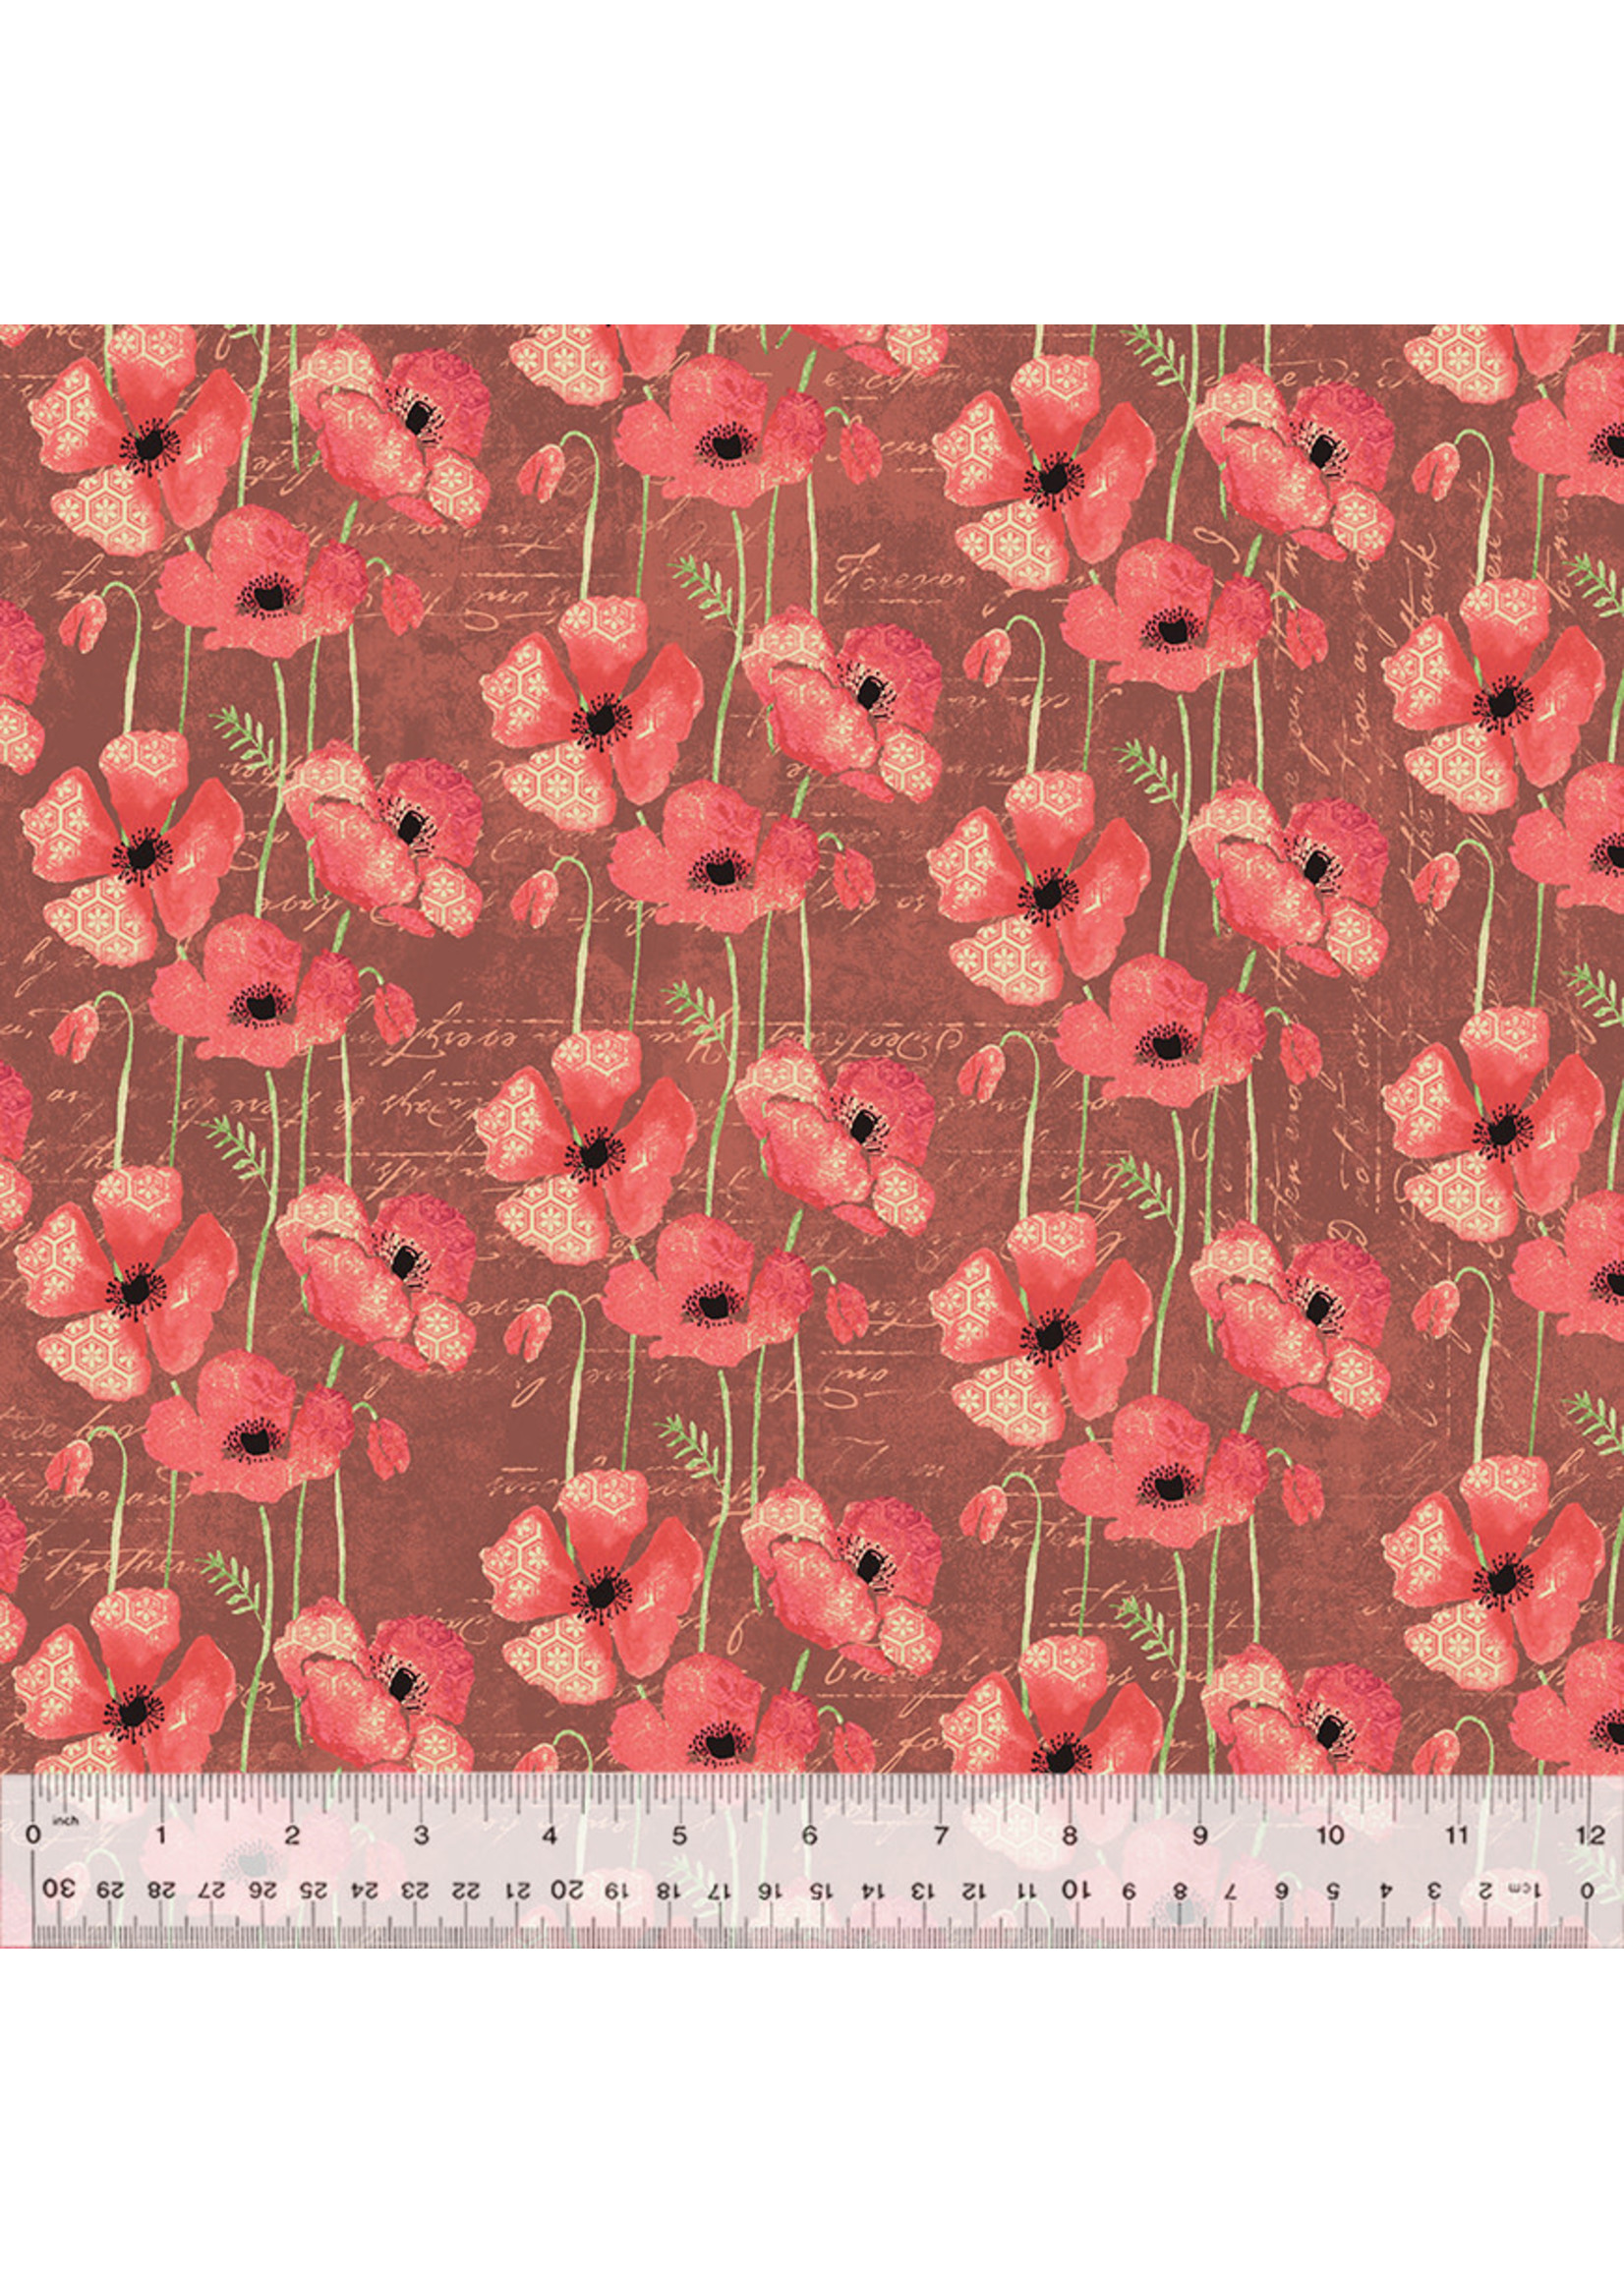 Windham Fabrics Poppy - Carmine - 2508-813